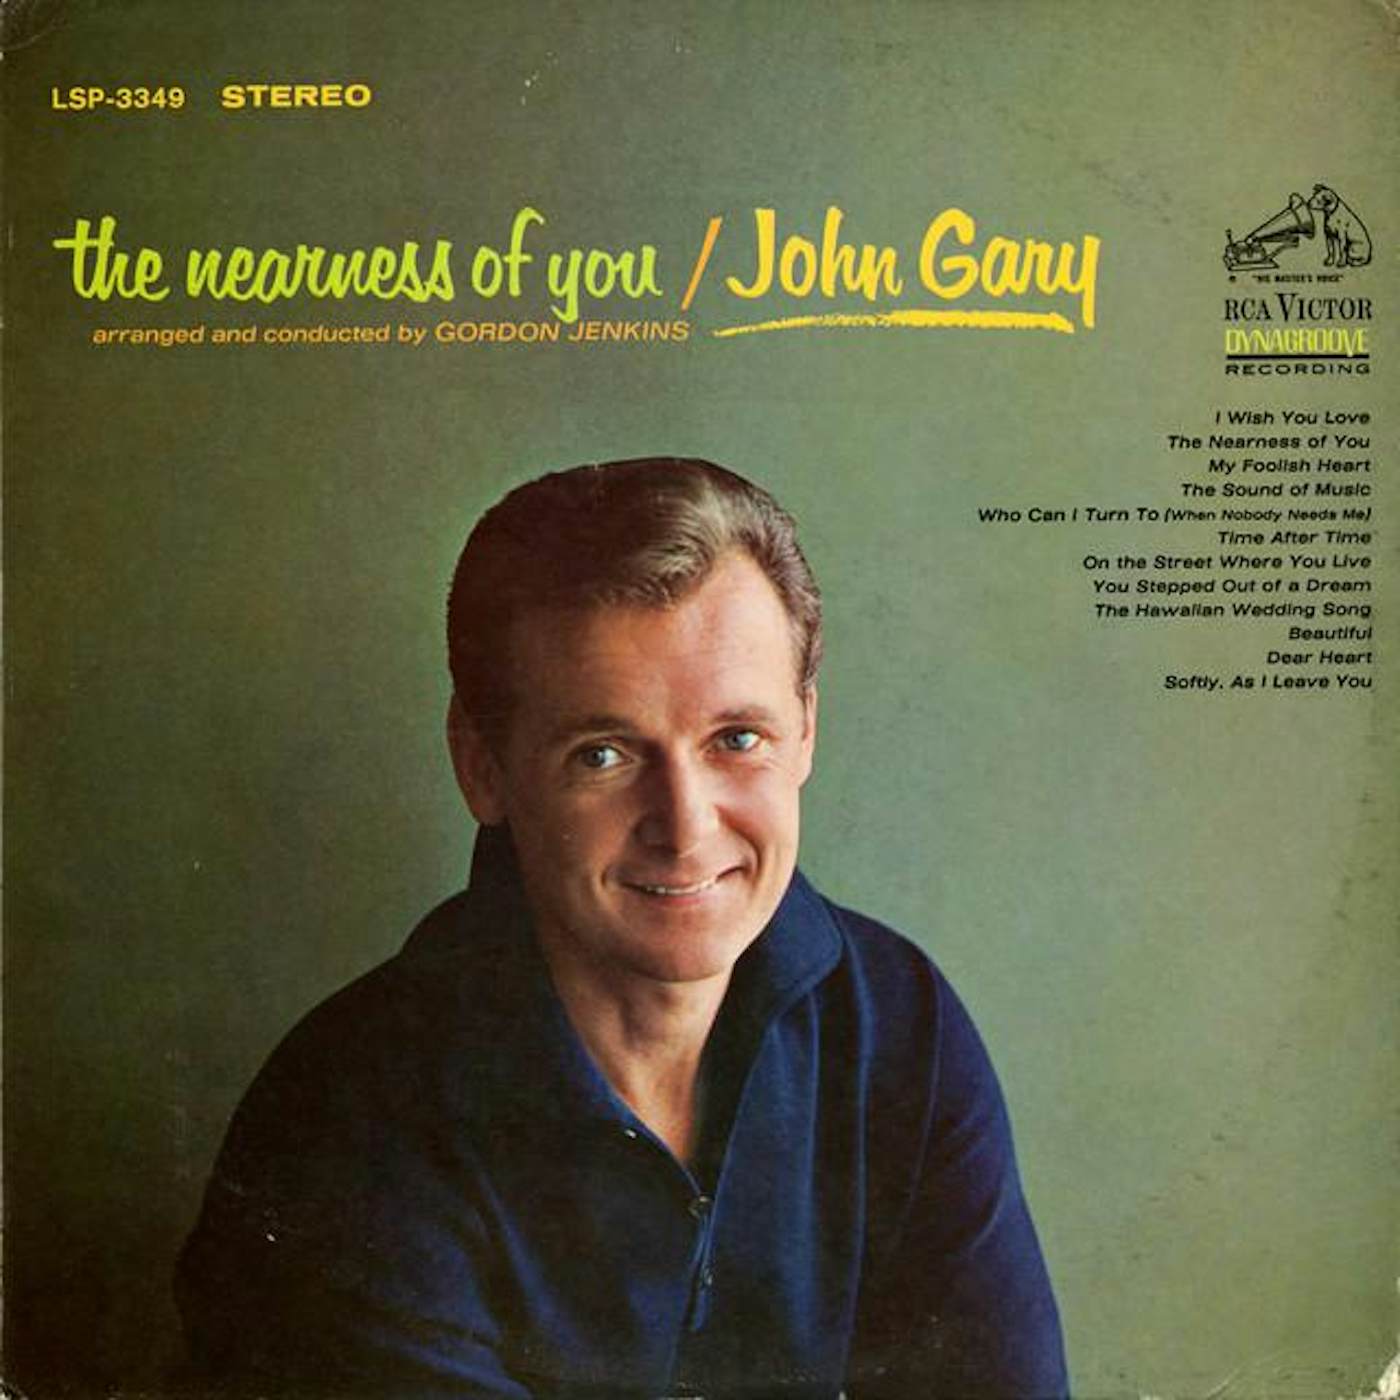 John Gary